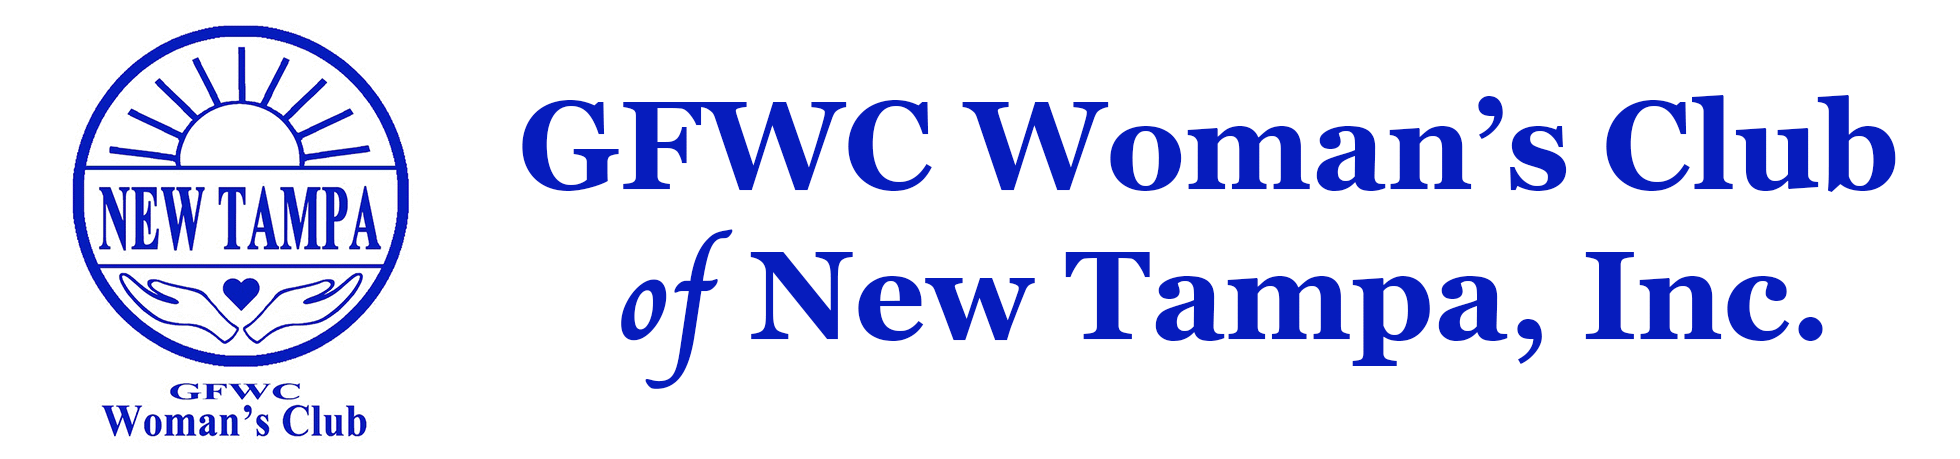 GFWC Woman's Club of New Tampa, Inc.